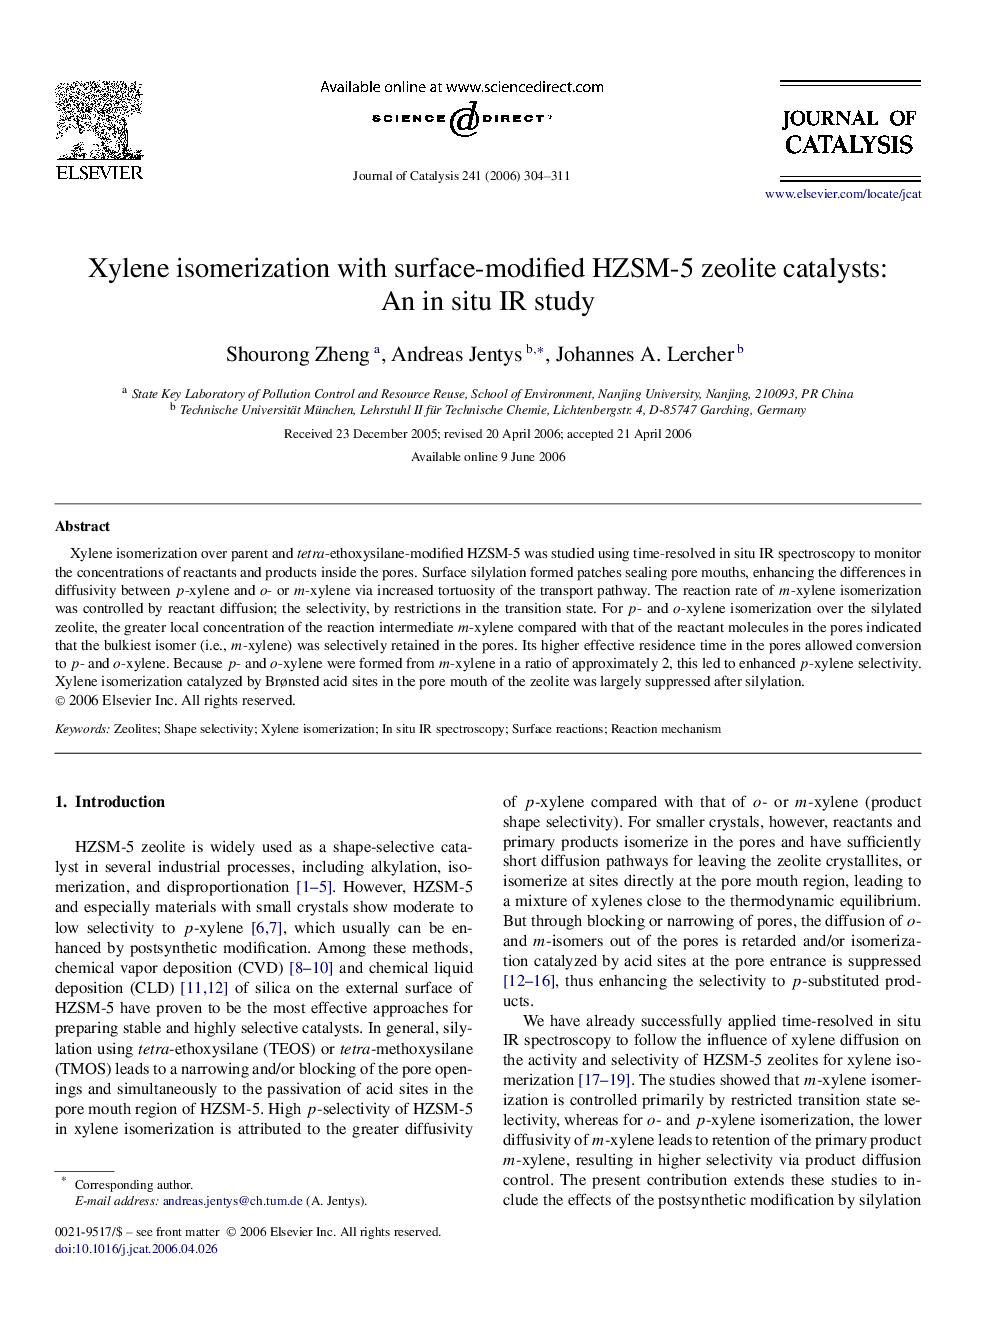 Xylene isomerization with surface-modified HZSM-5 zeolite catalysts: An in situ IR study